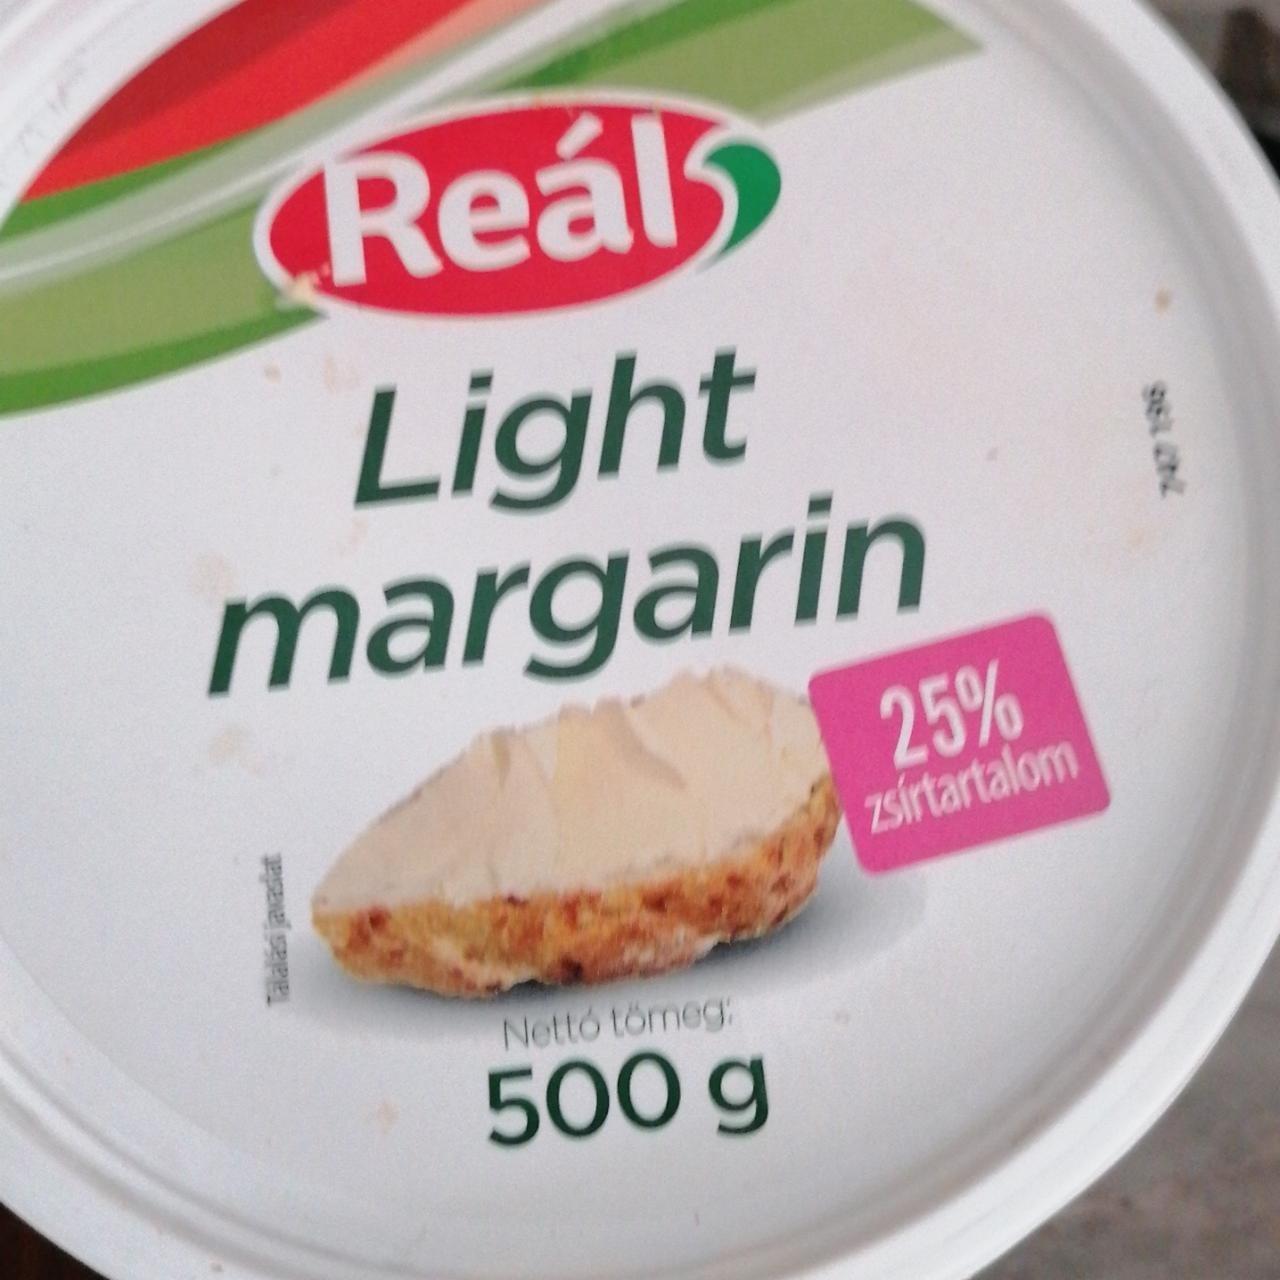 Képek - Light margarin 25% Reál